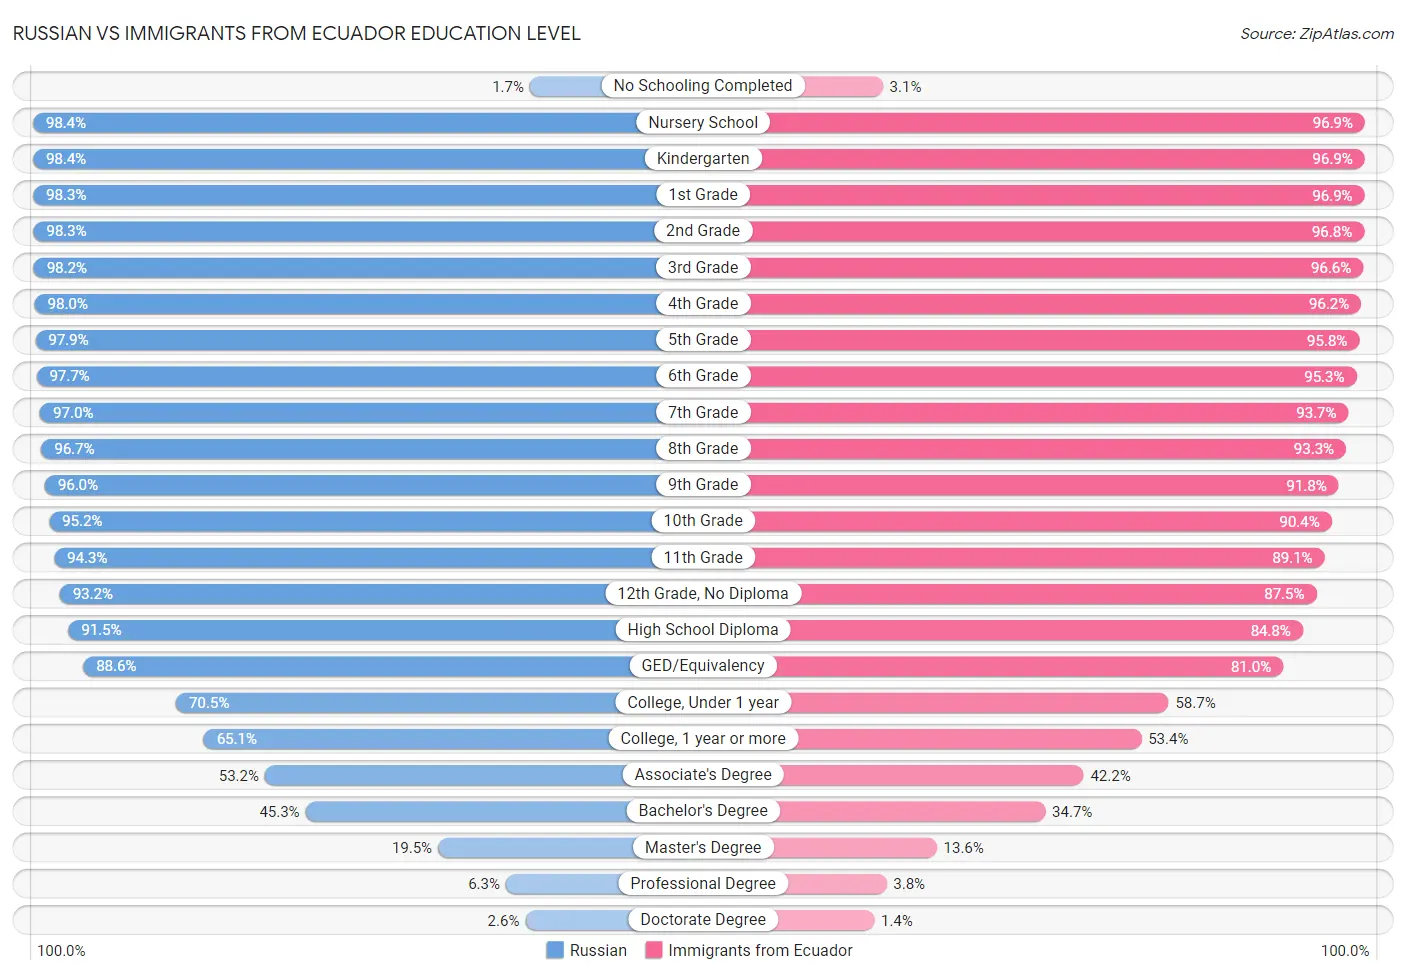 Russian vs Immigrants from Ecuador Education Level